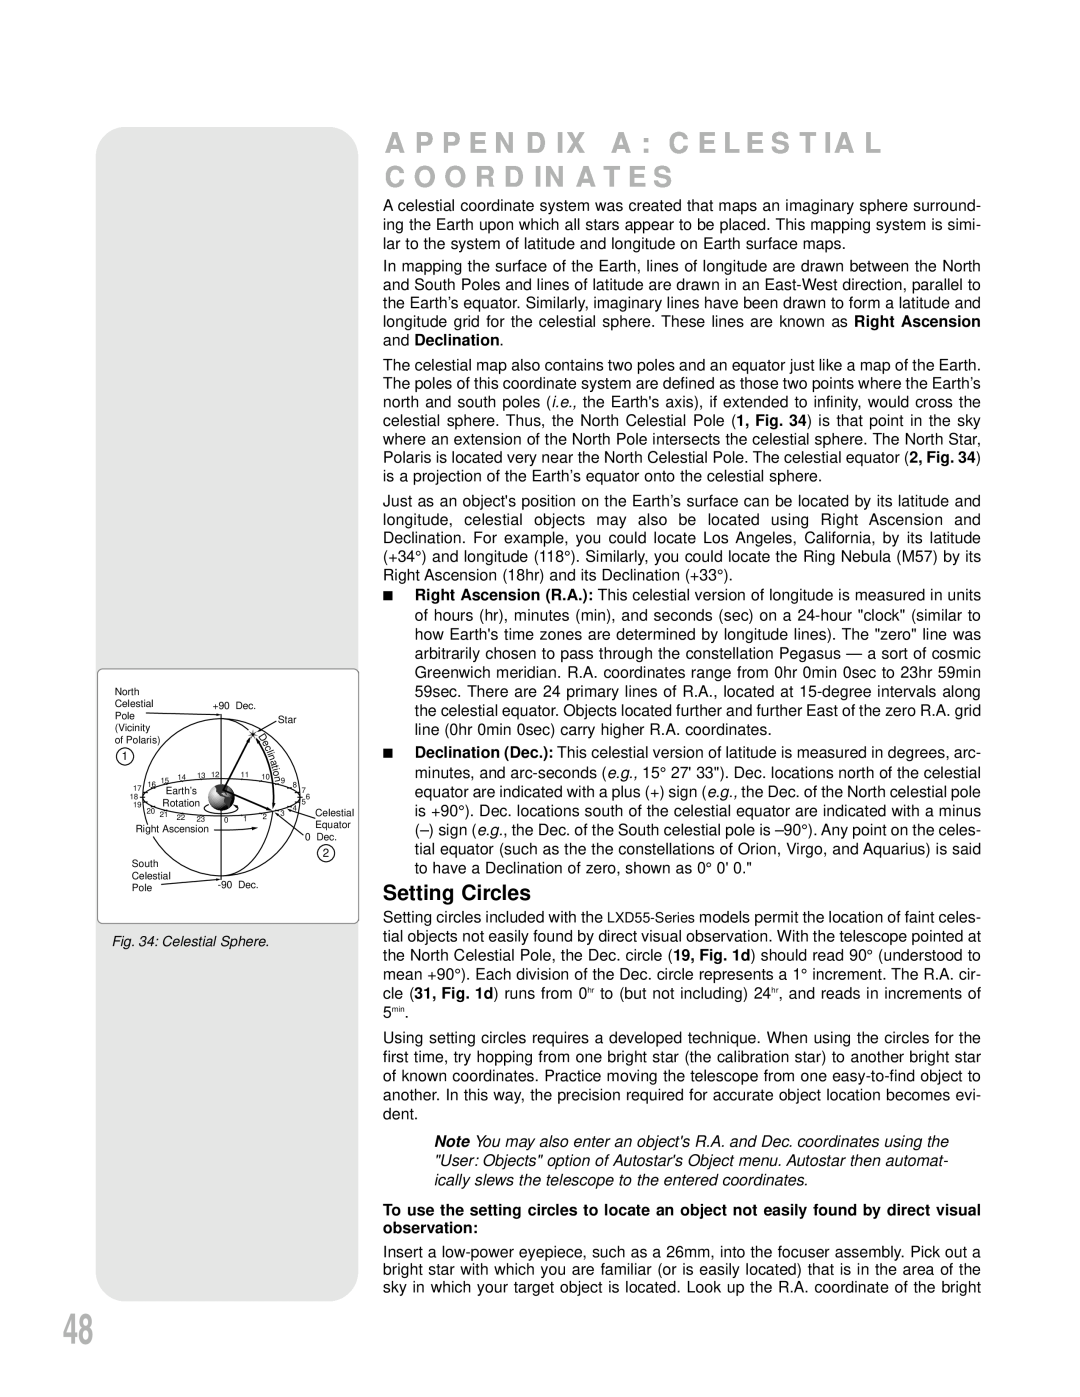 Meade LXD55 instruction manual Appendix A Celestial Coordinates, Setting Circles 